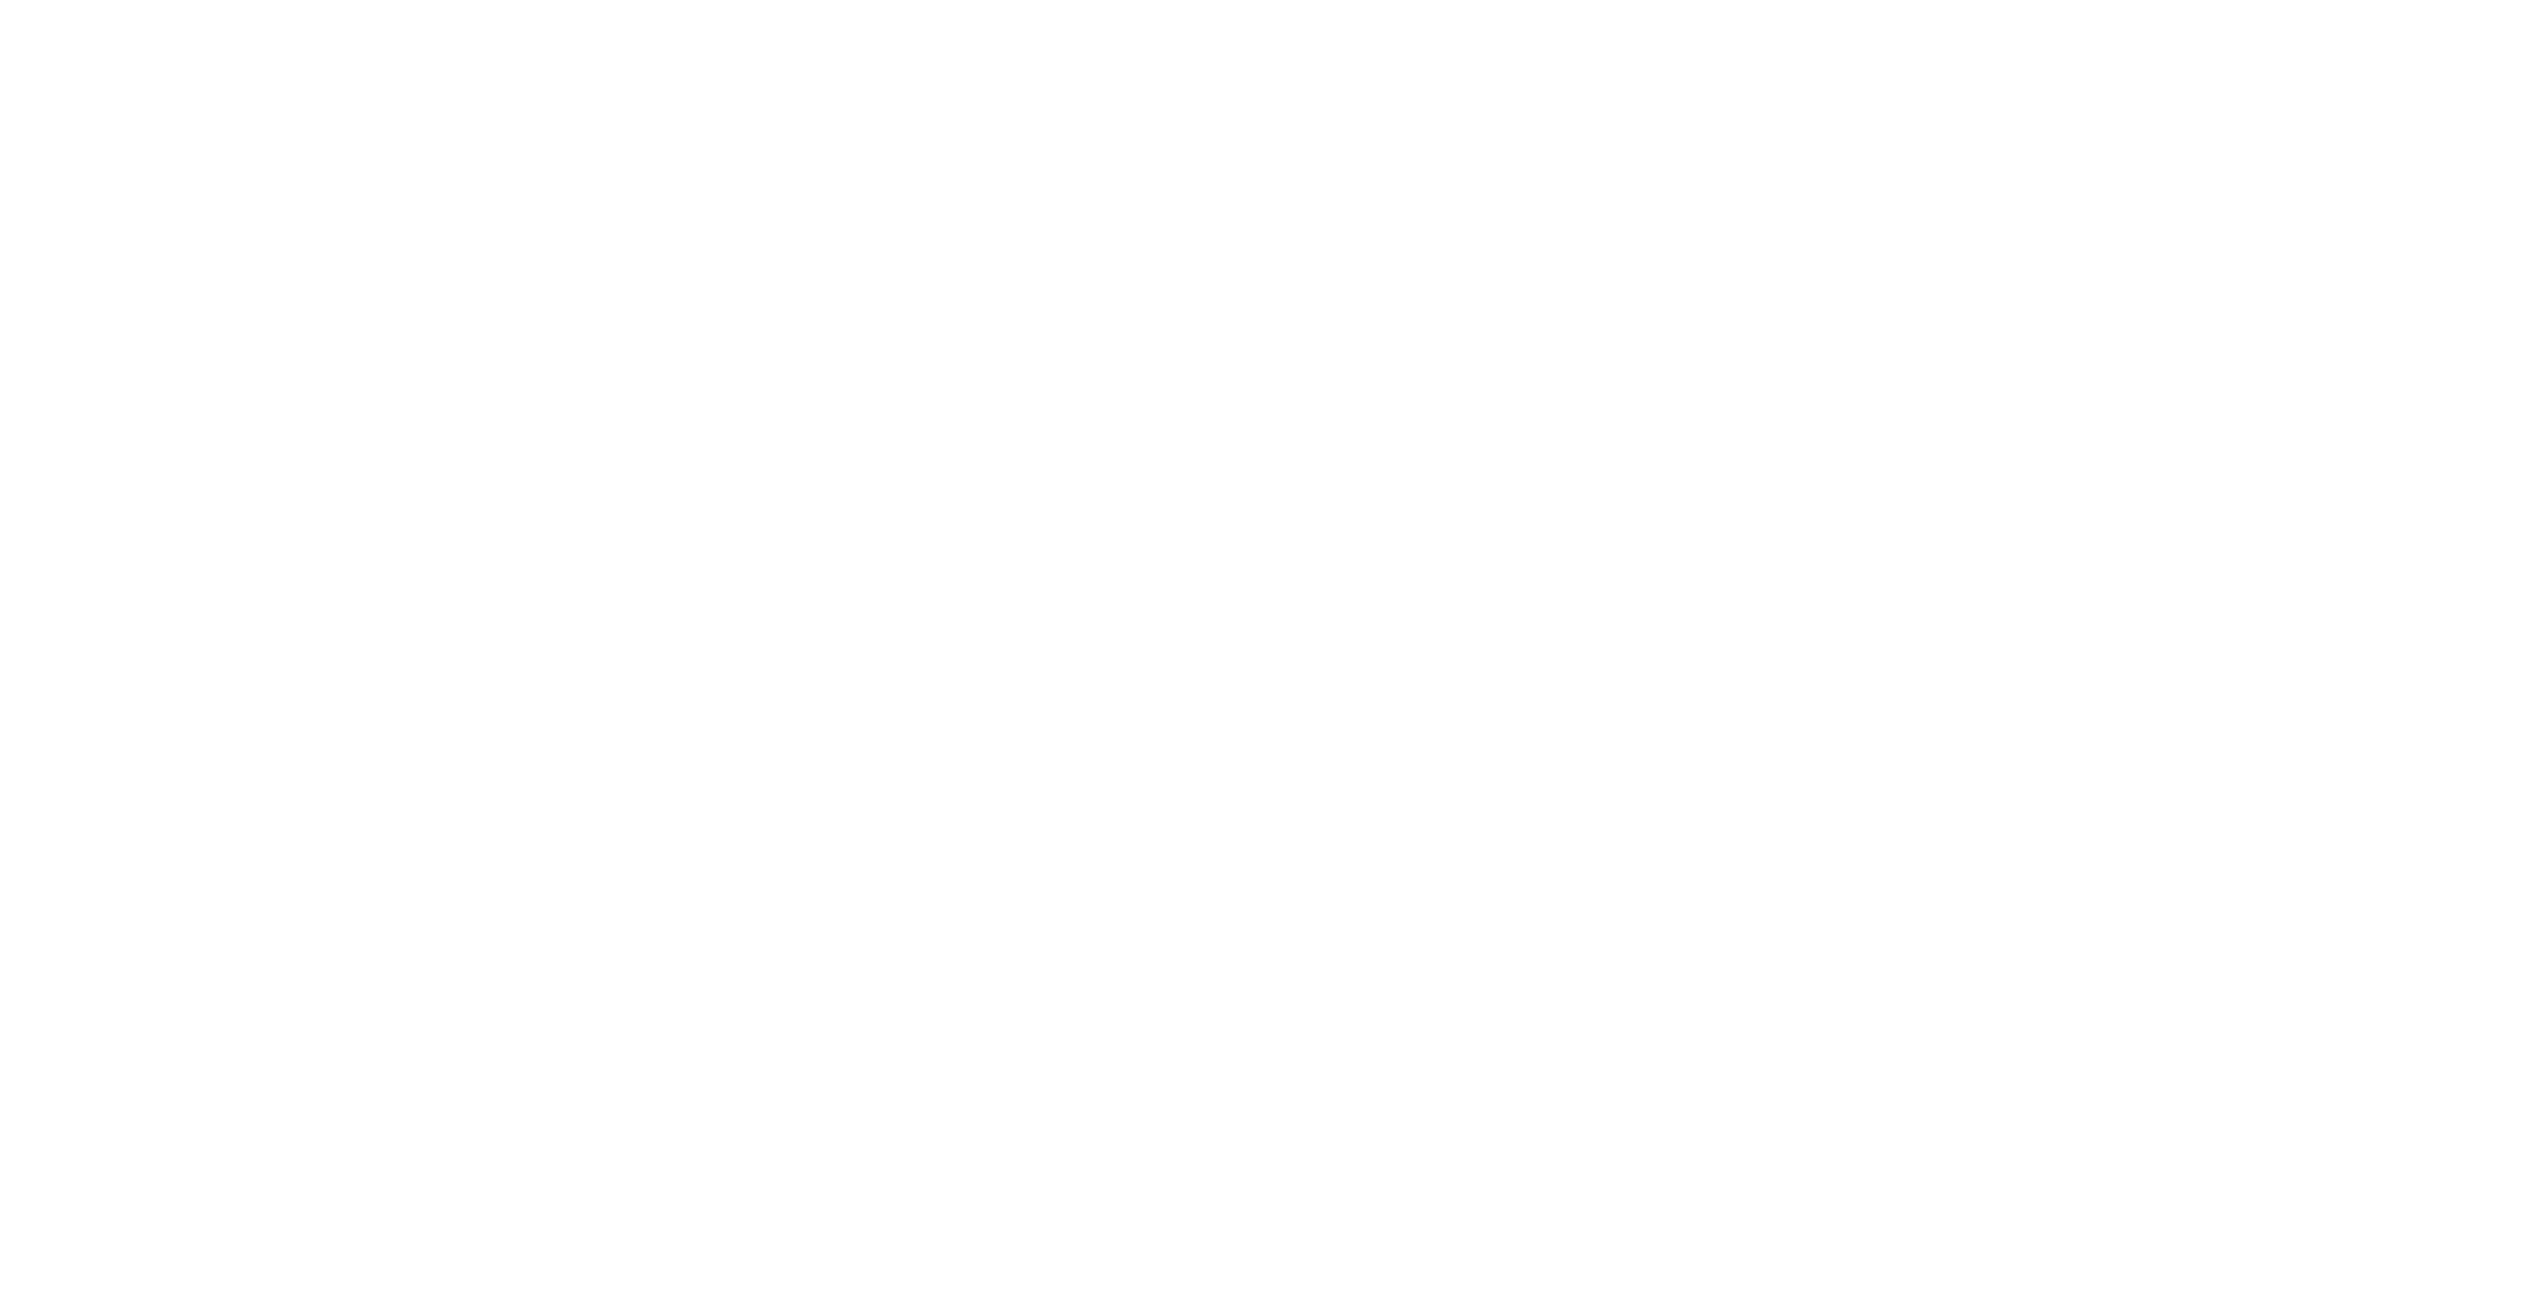 I Smile Back logo